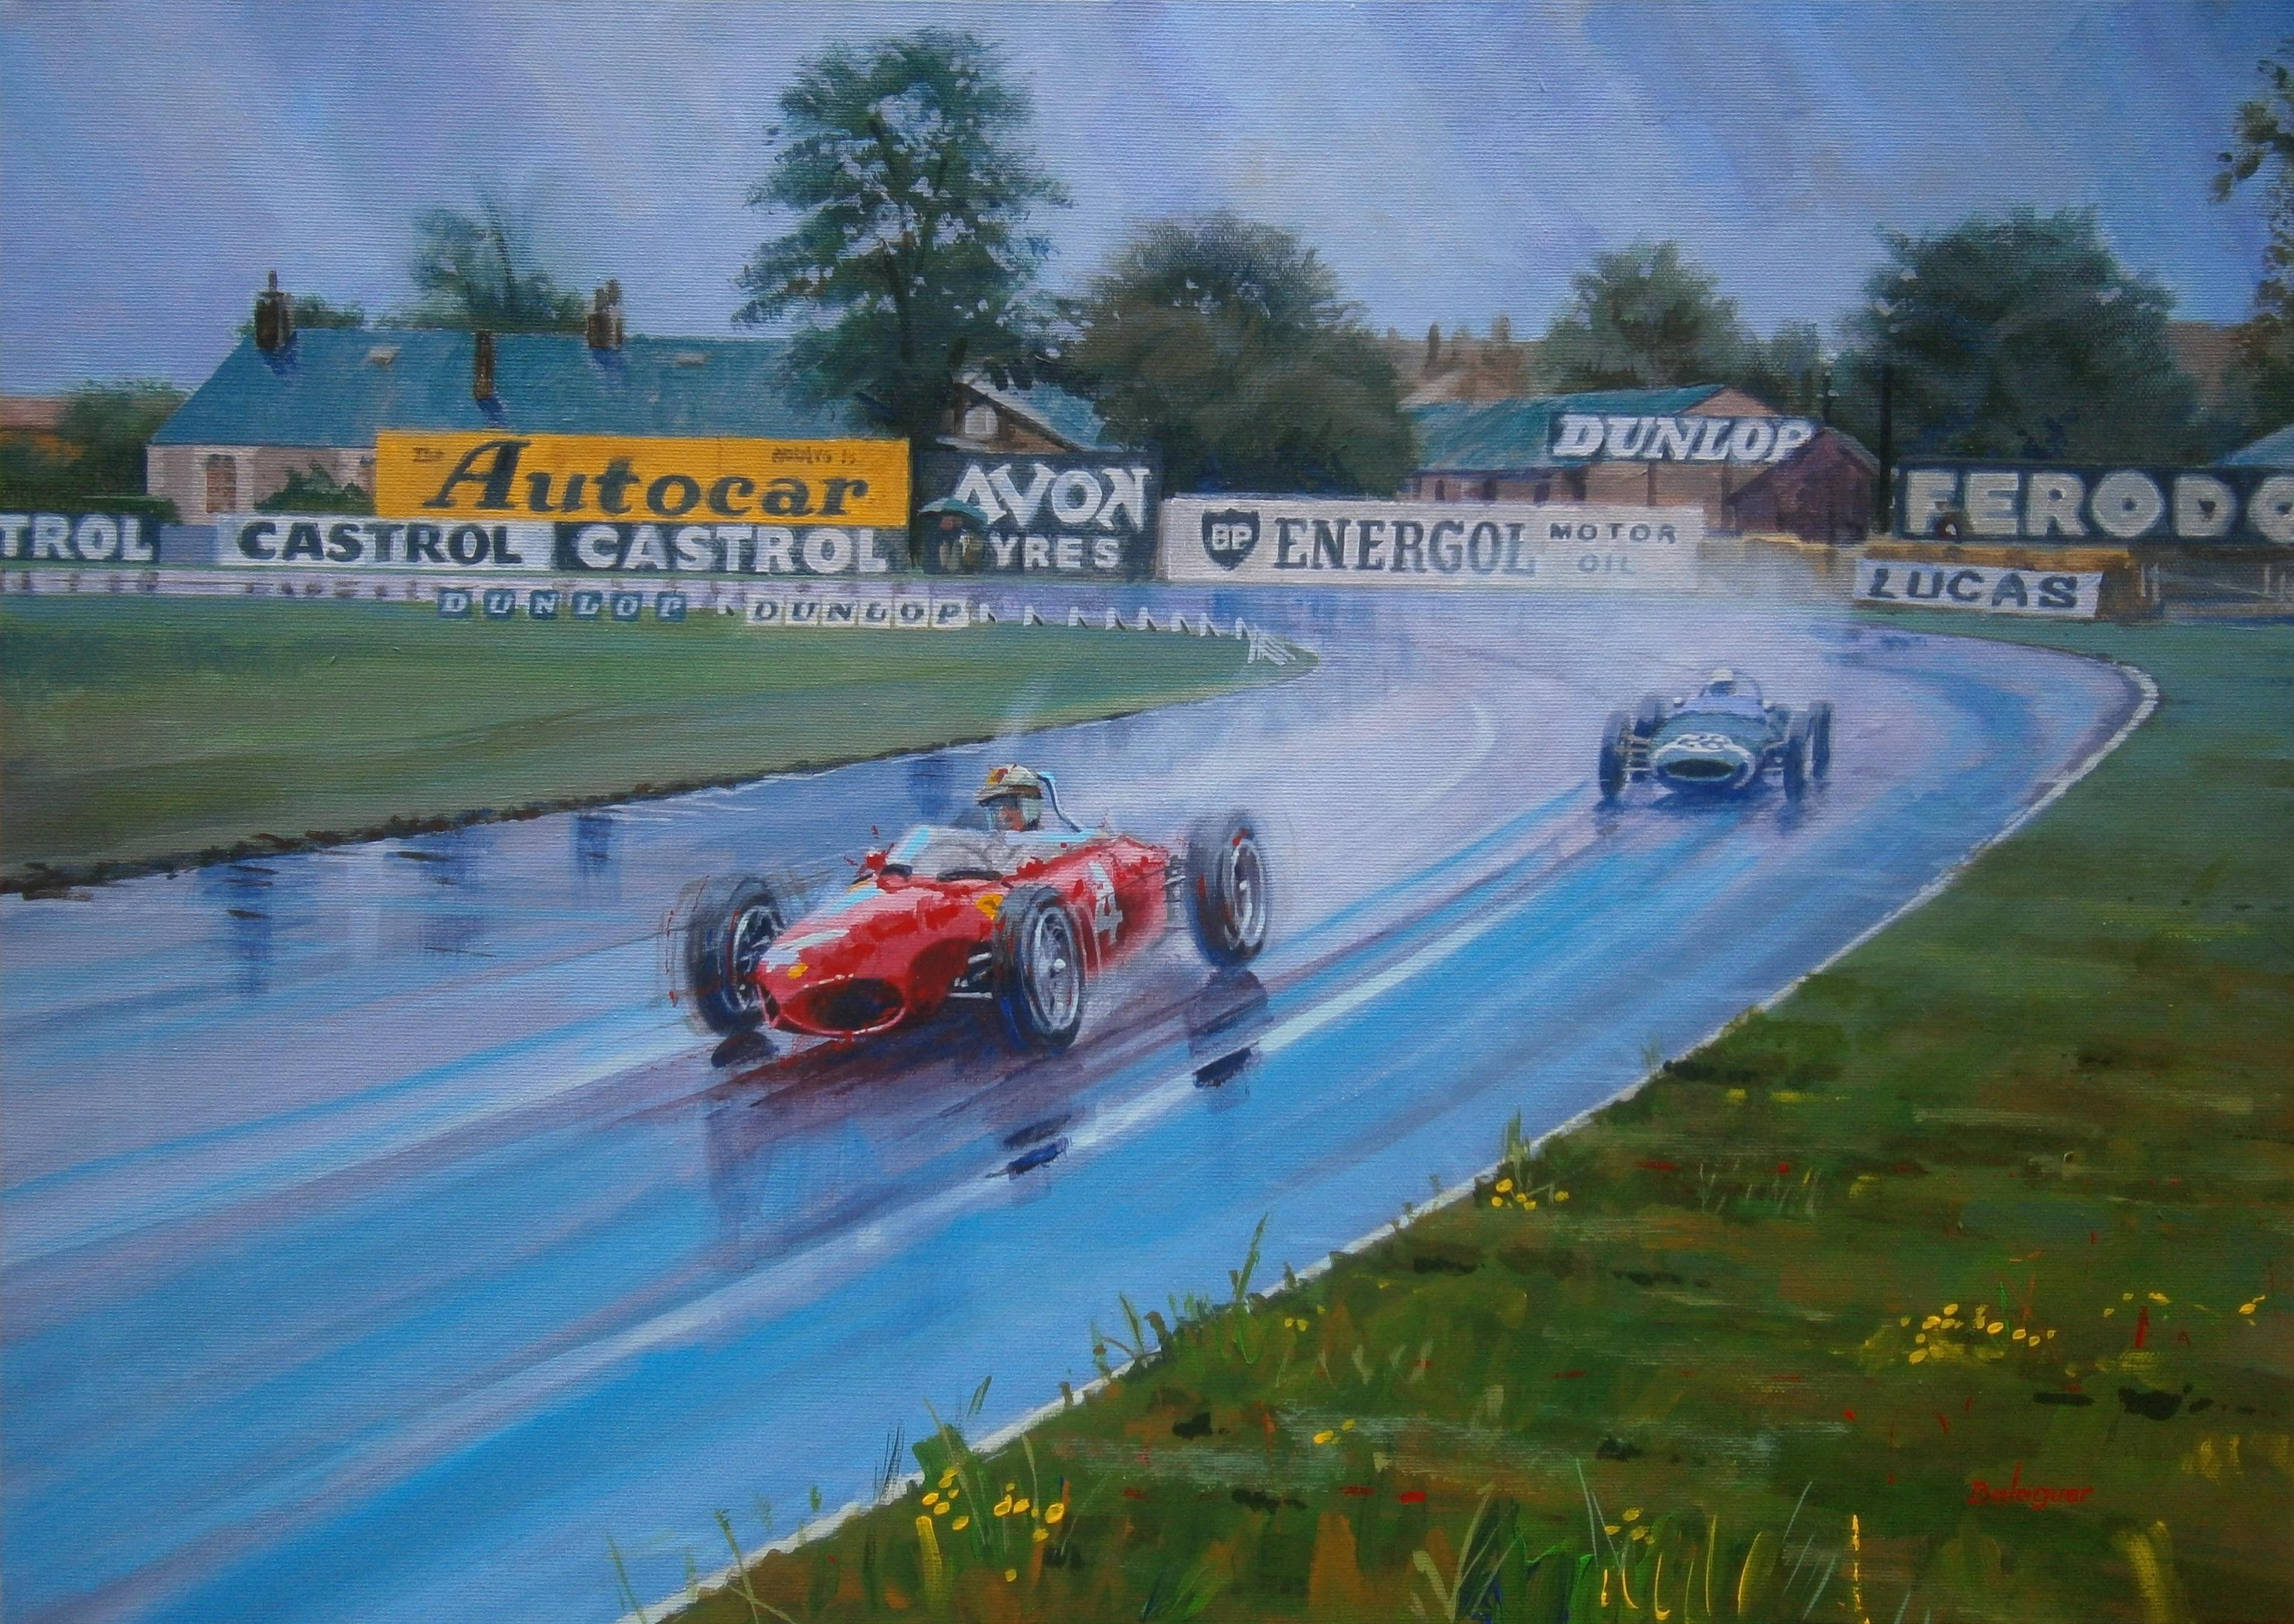 Wolfgang von Trips (Ferrari 156 F1) & Stirling Moss (Lotus-Climax 18-21) 